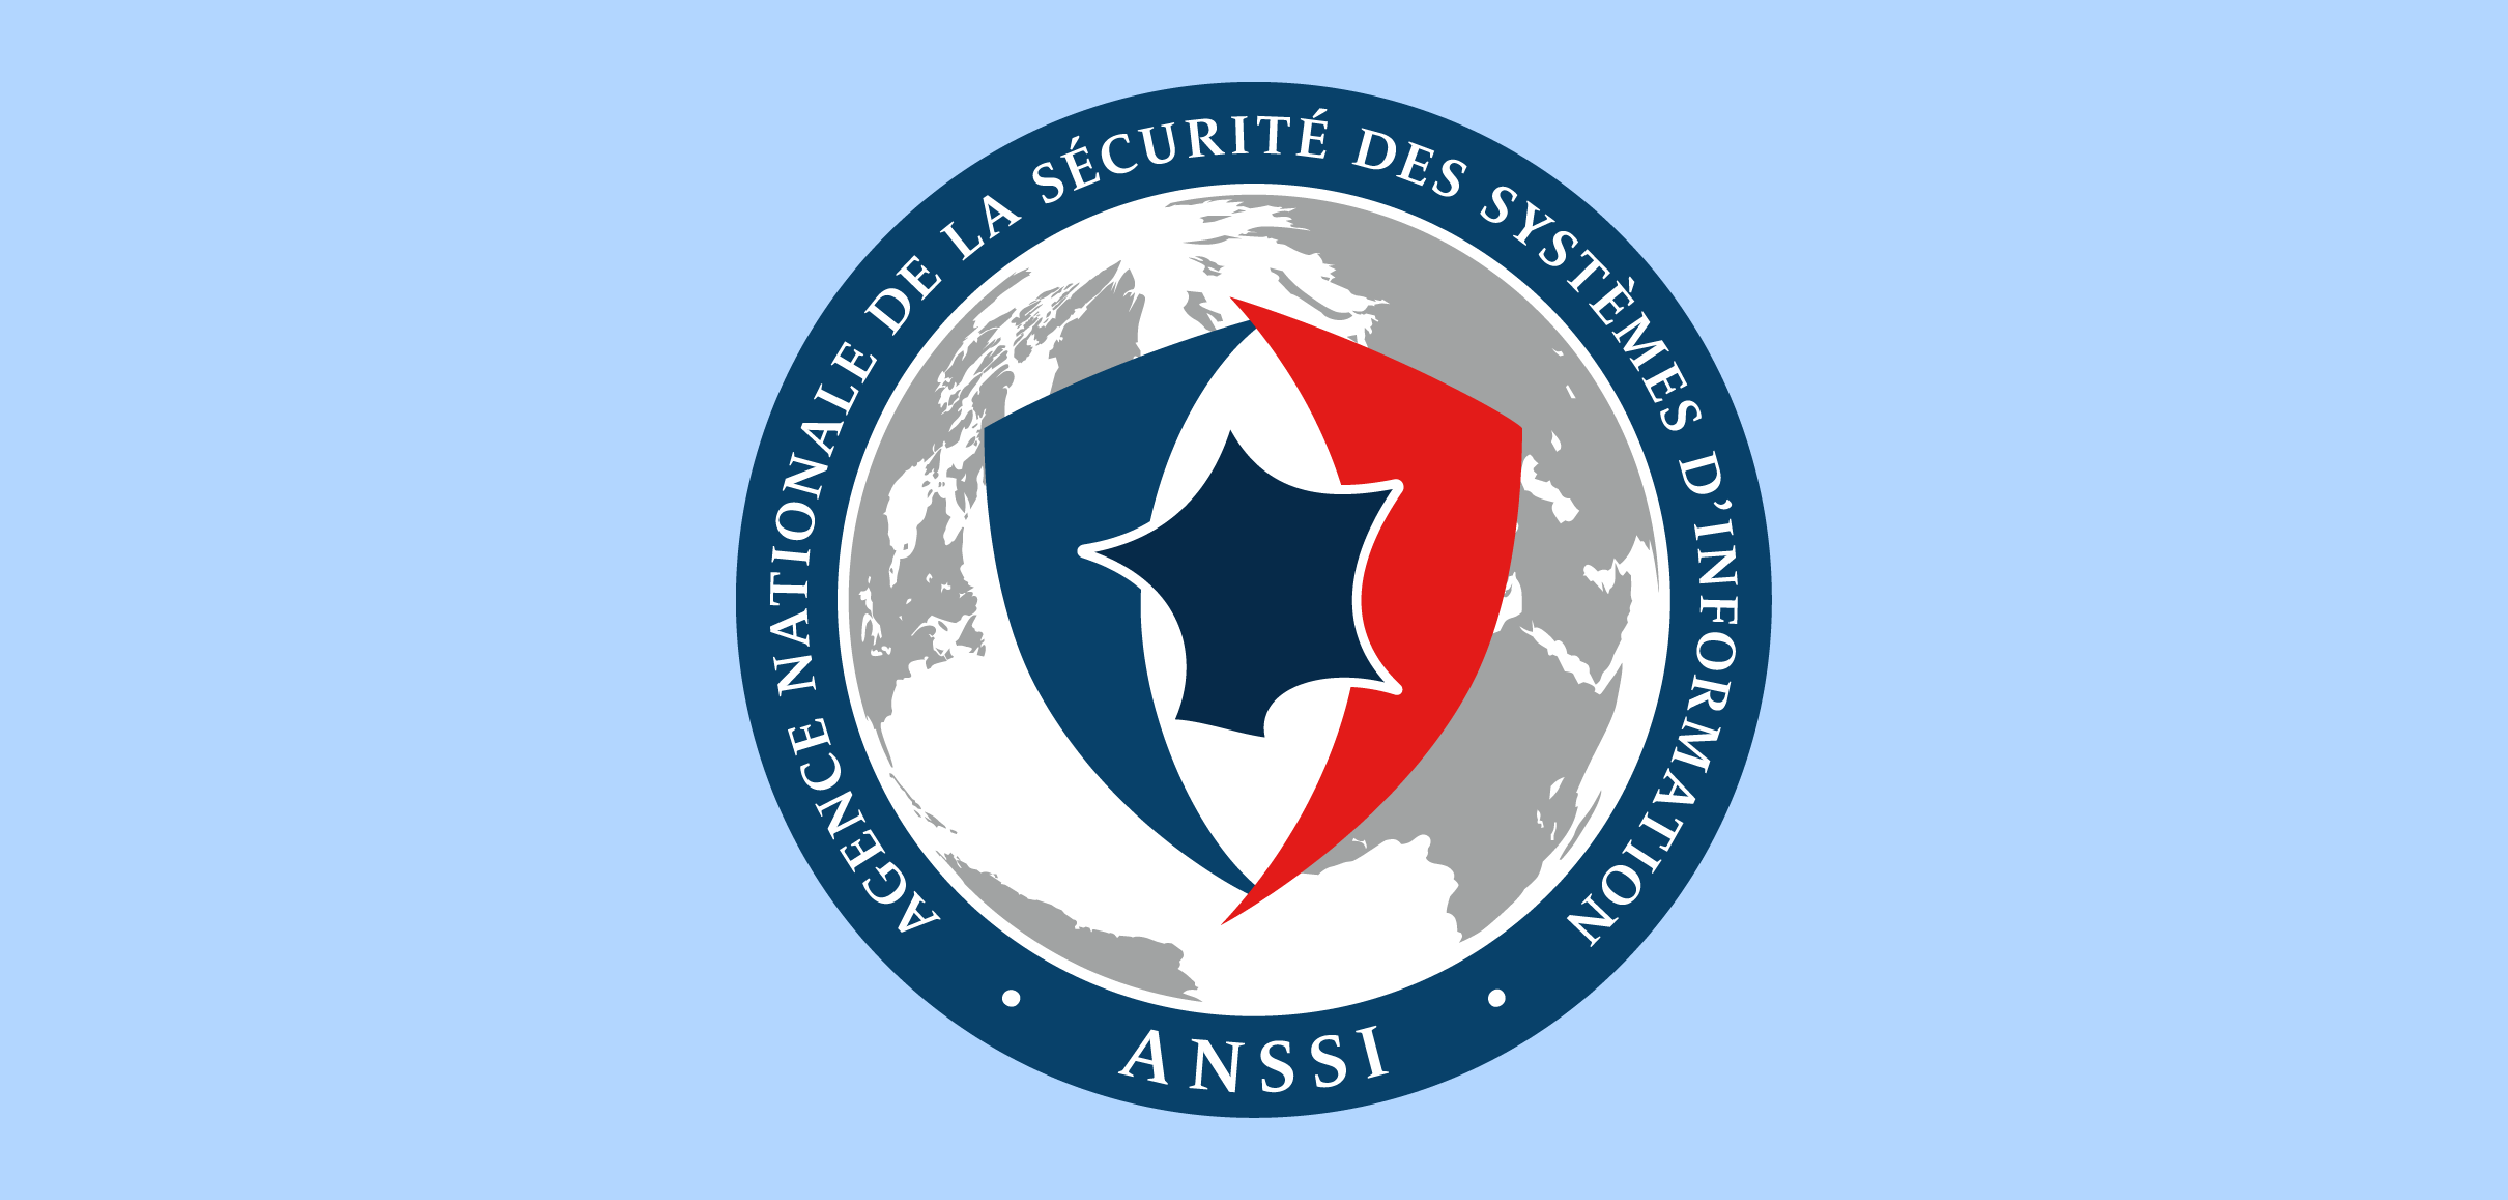 Virtru is Certified by French National Agency ANSSI | Virtru